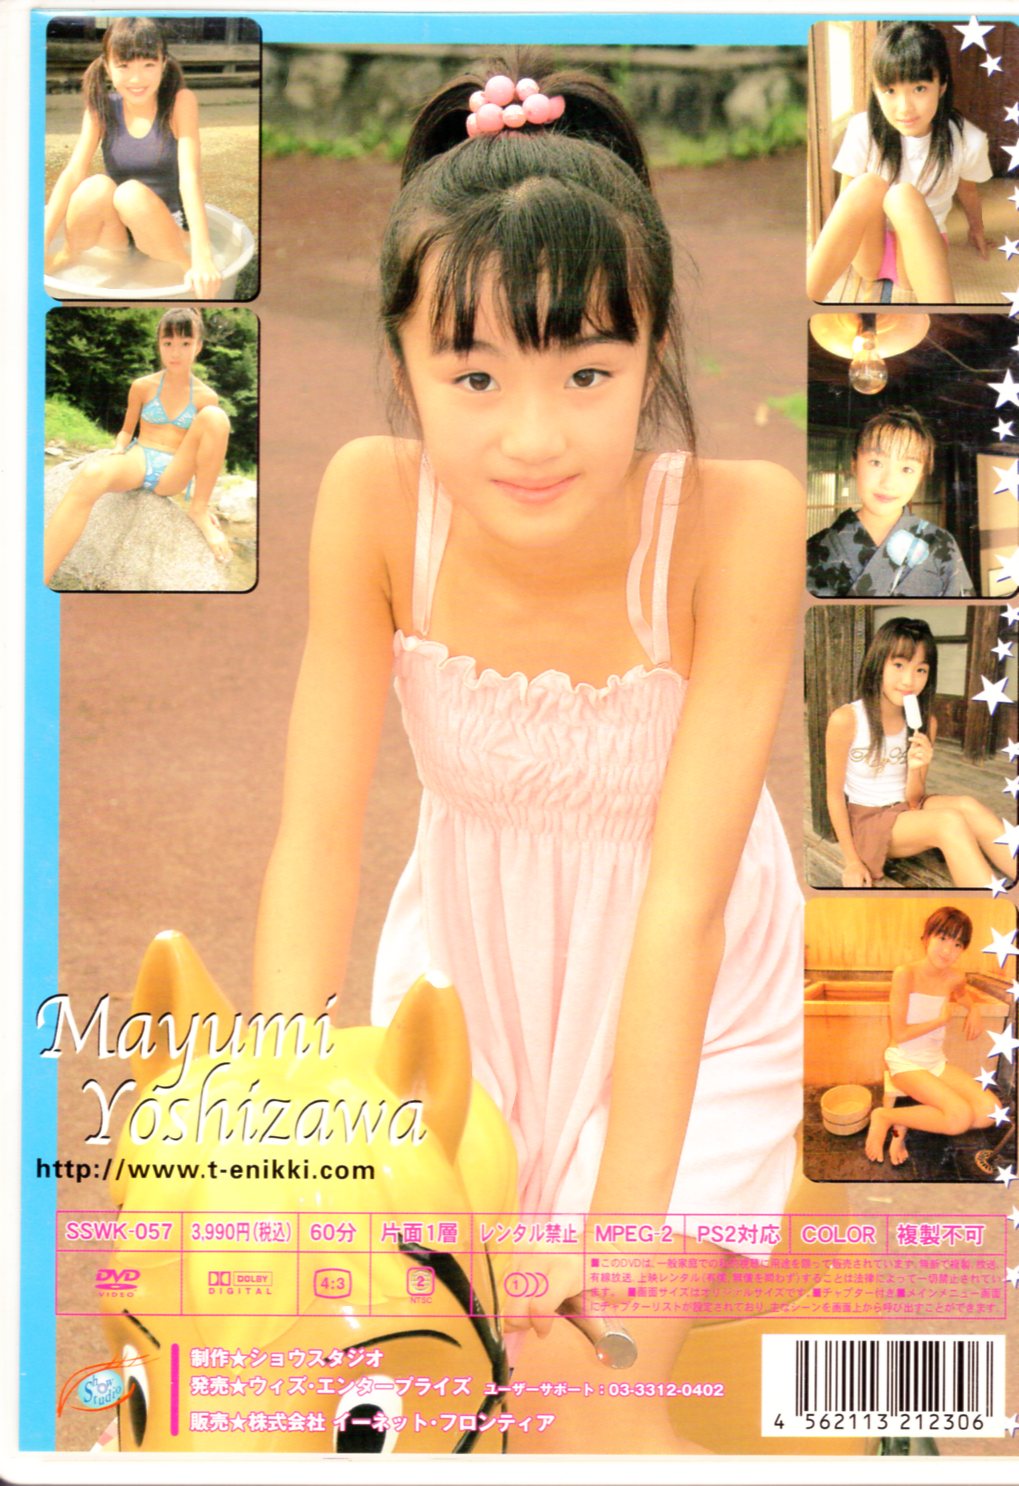 E-net Frontier (Mayumi Yoshizawa) DVD Angel's picture diary In 